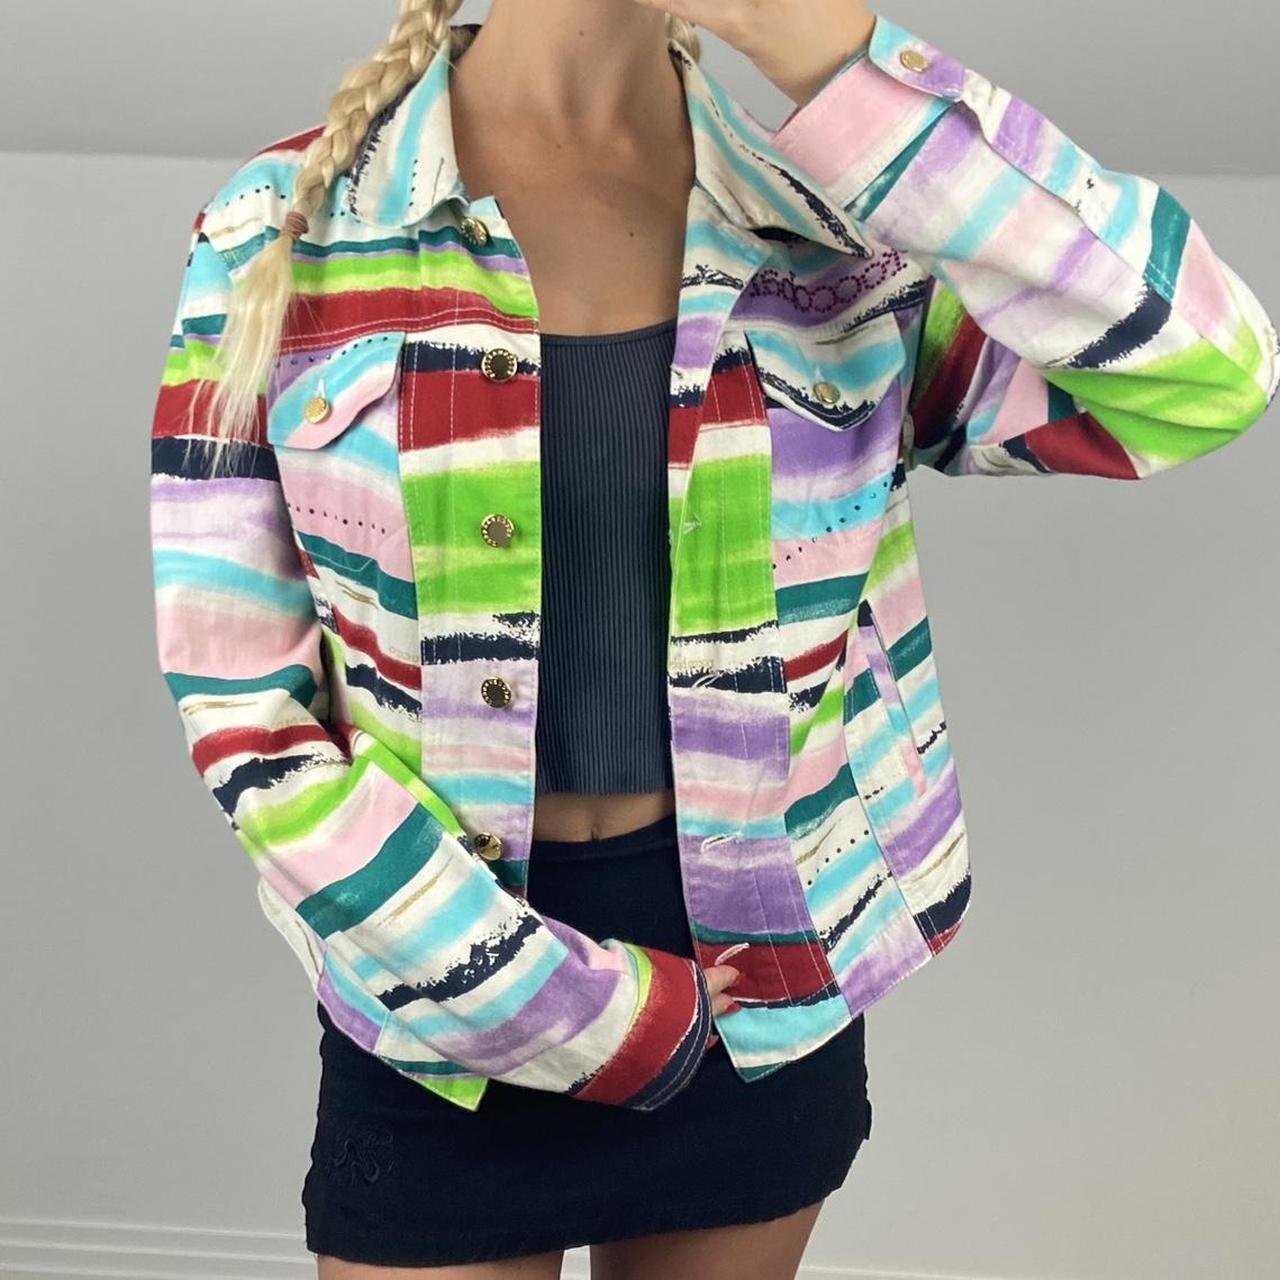 ASOS DESIGN western denim jacket in multi colour tie dye | ASOS